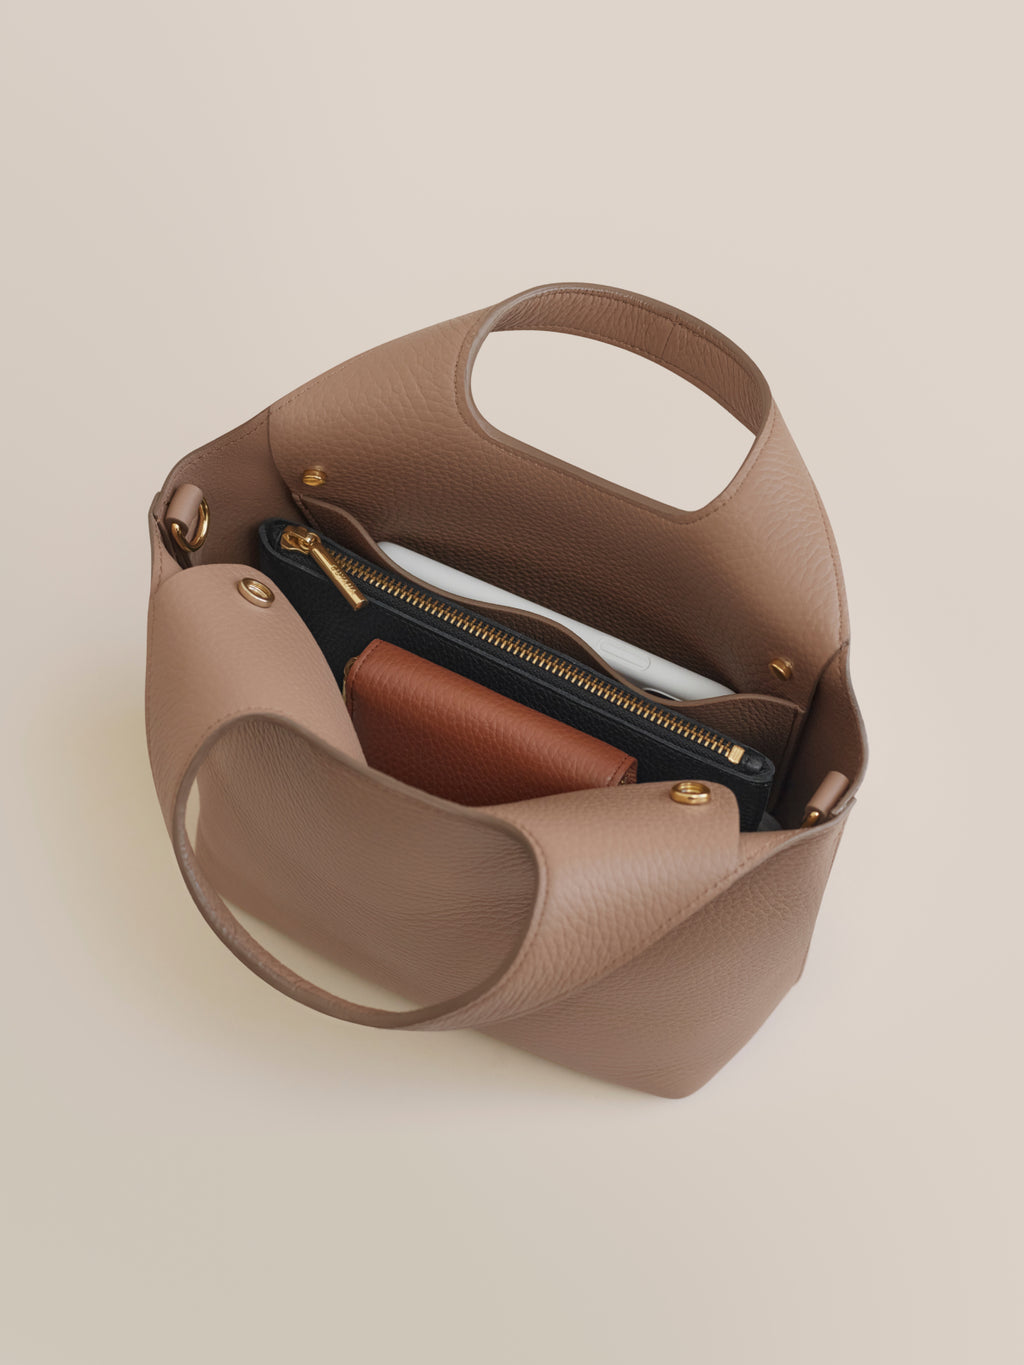 Handbag with zipper compartment visible.